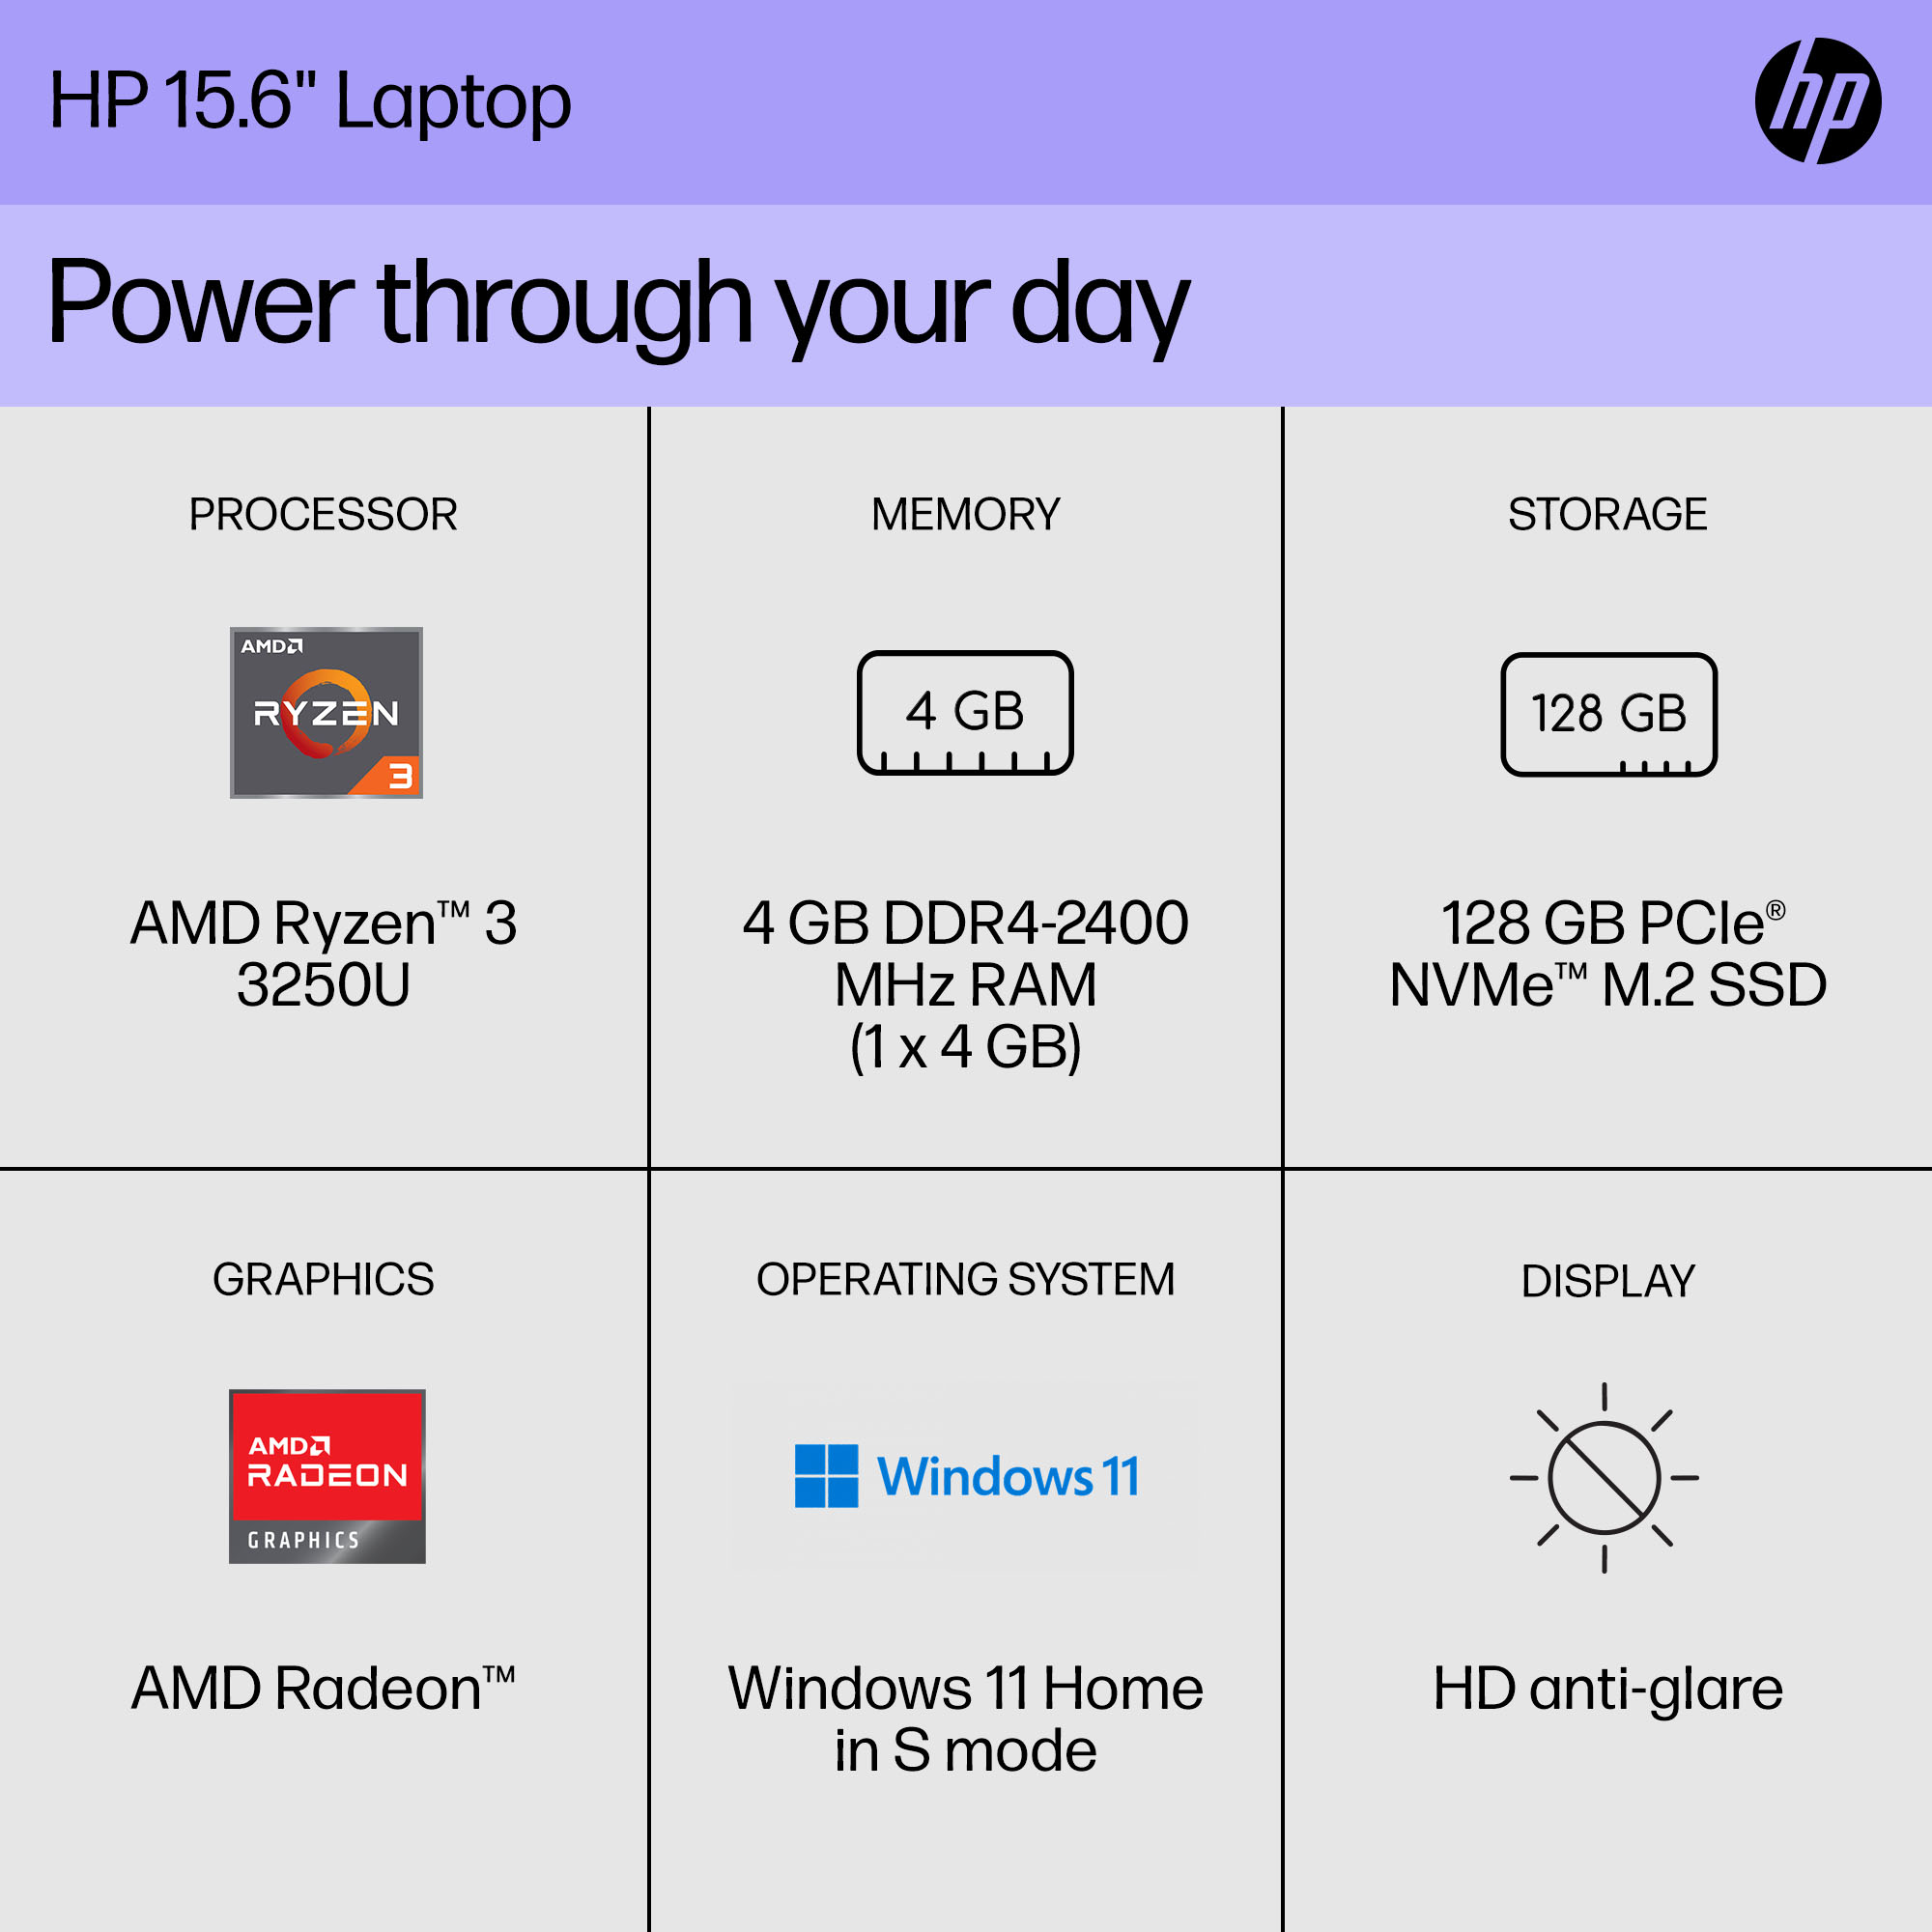 HP 15.6" Laptop Bundle, AMD Ryzen 3 3250U, 4GB RAM, 128GB SSD, Wireless Mouse, Pale Rose Gold, Windows 11 Home in S mode, 15-ef1716wm - image 2 of 11